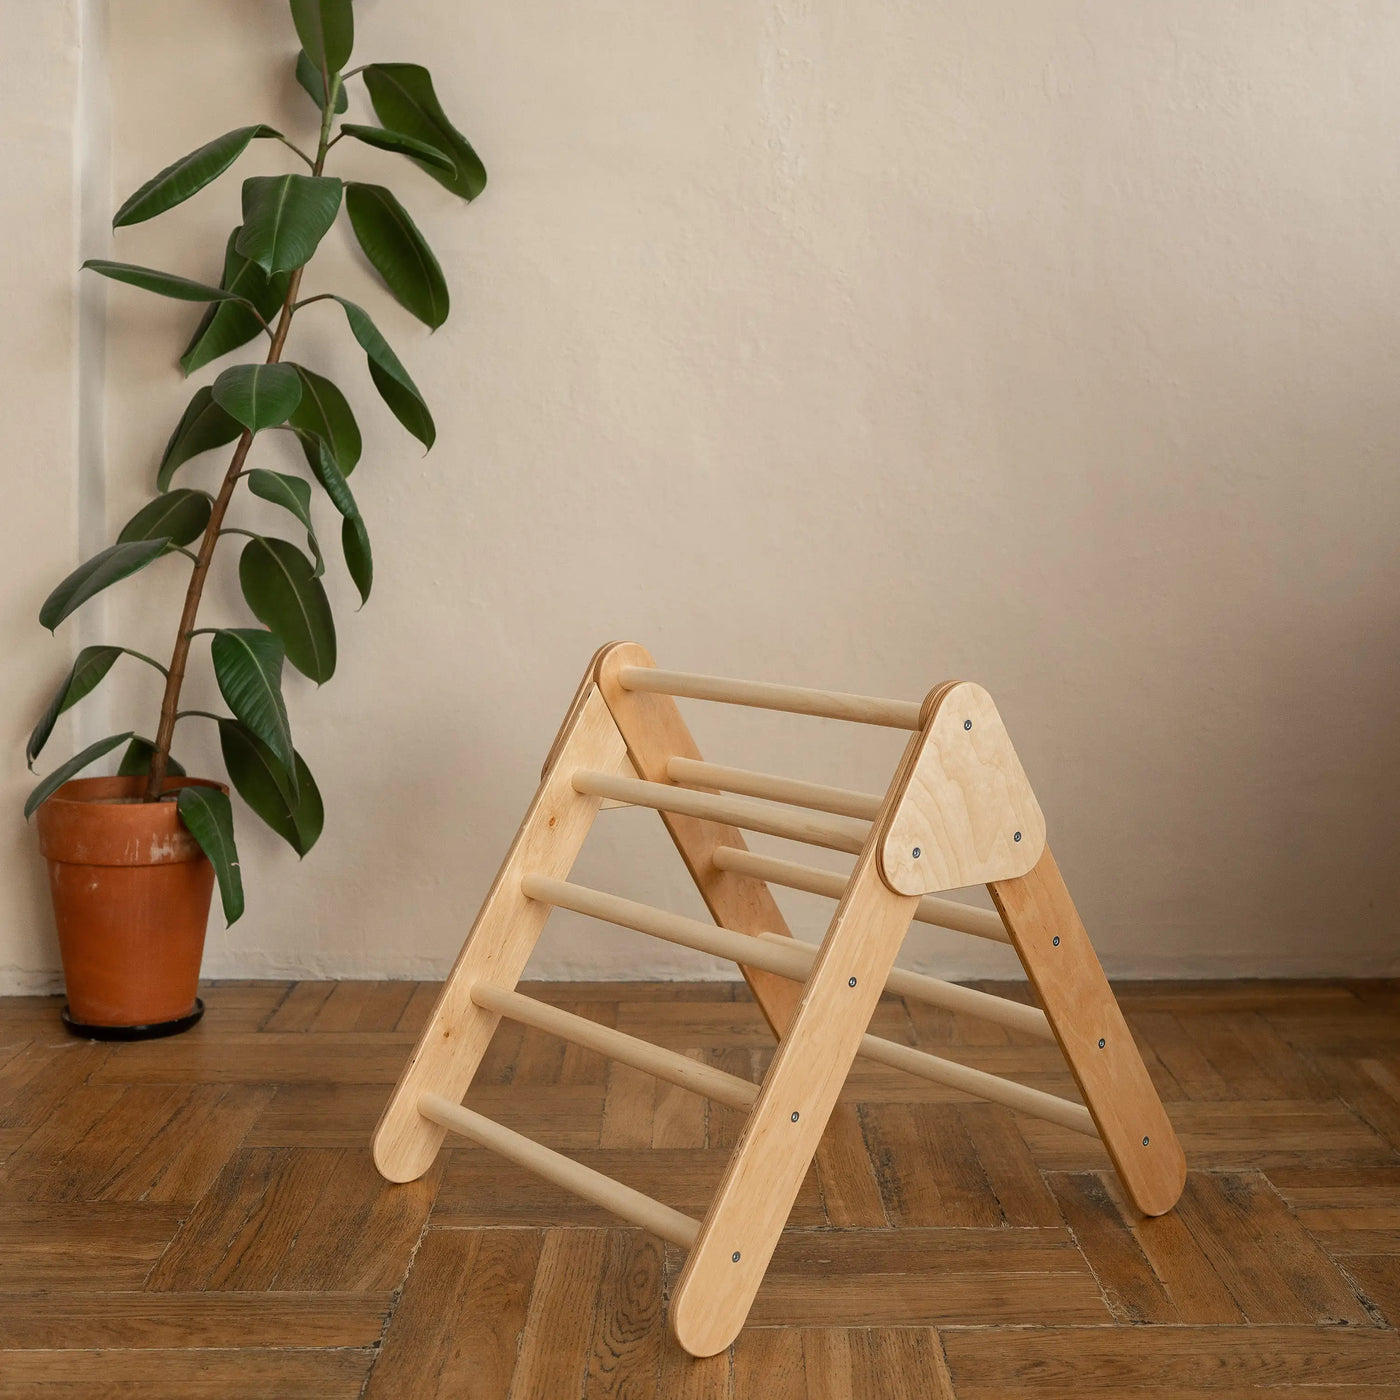 Find #1 Selling Medium Handmade Wooden Pikler Triangle for Kids 3